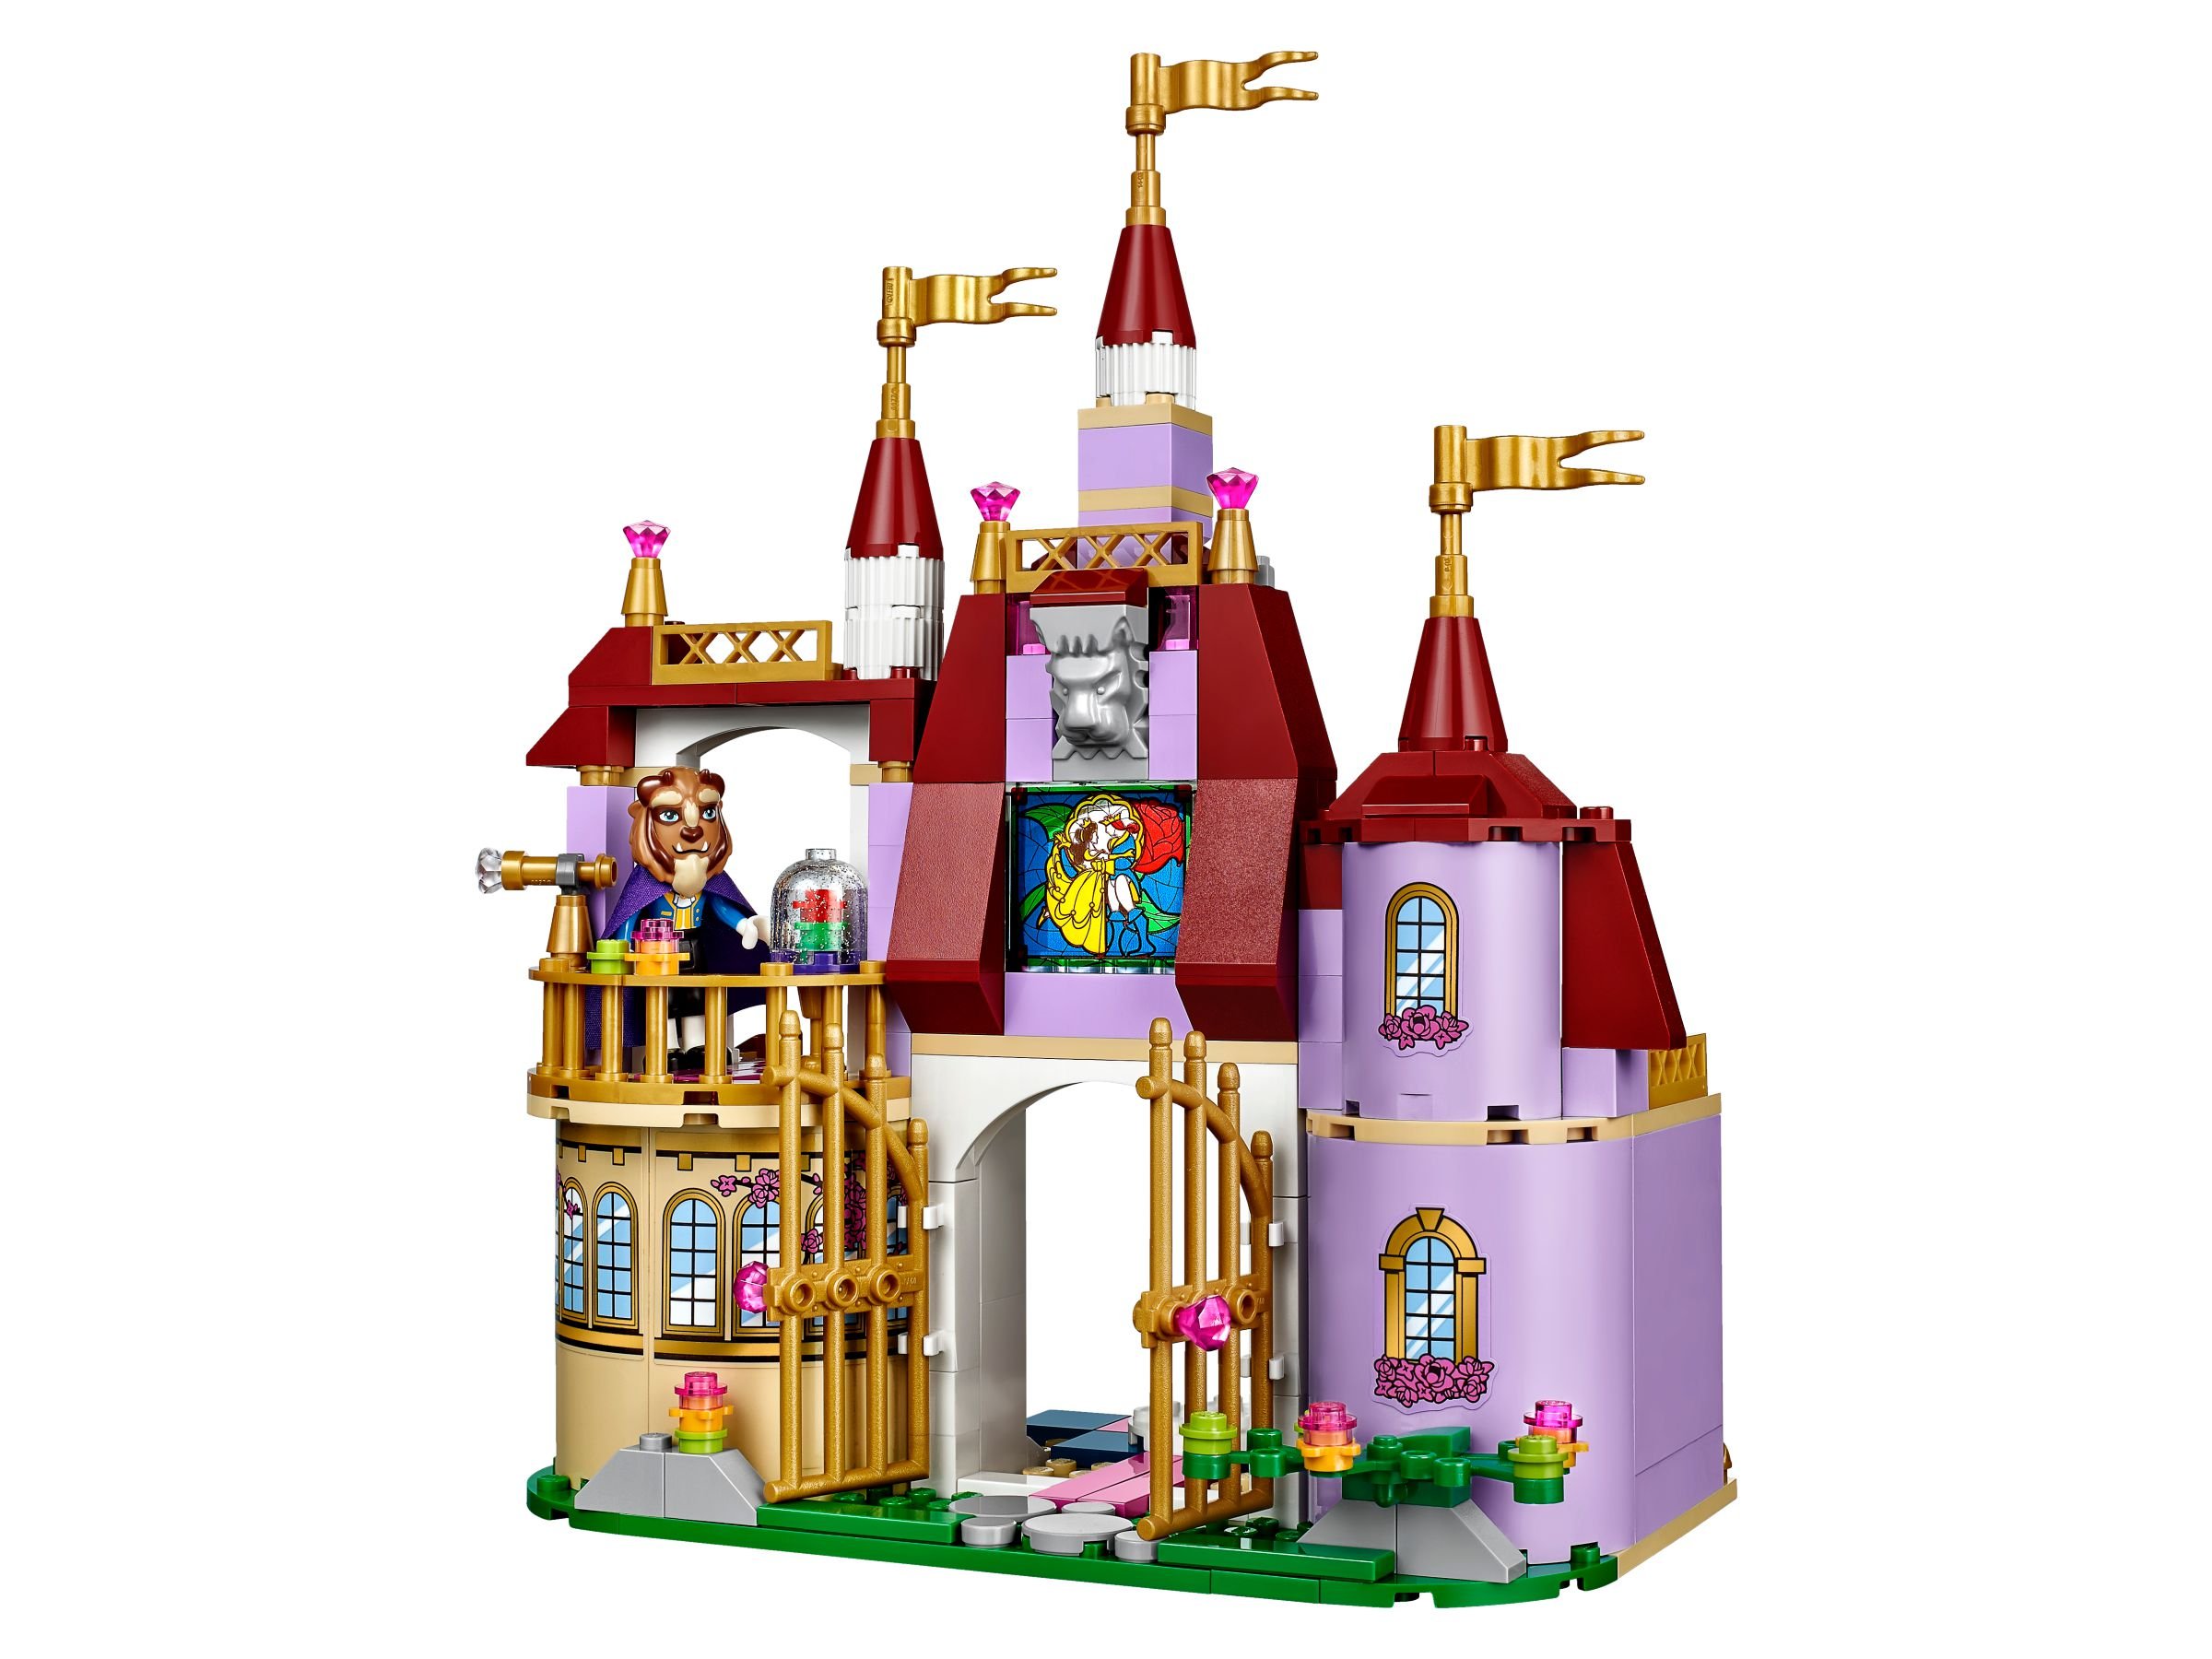 LEGO Disney 41067 Belles bezauberndes Schloss LEGO_41067_alt2.jpg